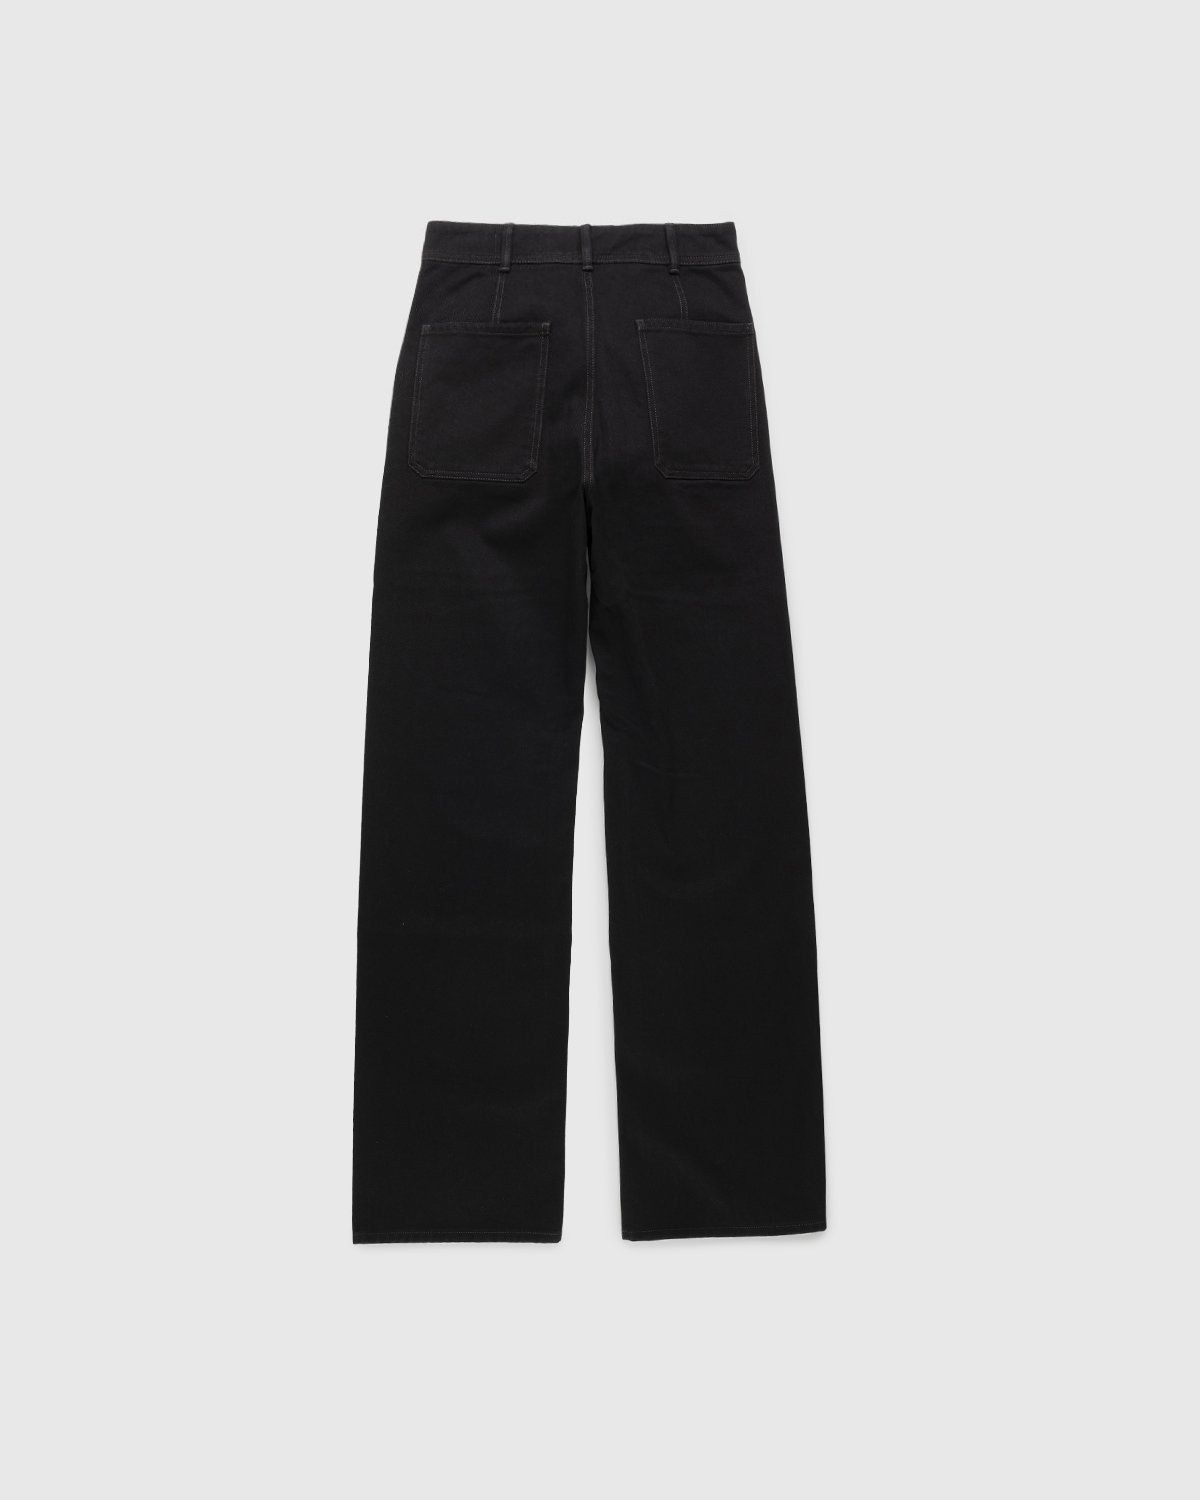 Lemaire – Rinsed Denim Sailor Pants Black - Denim - Black - Image 2